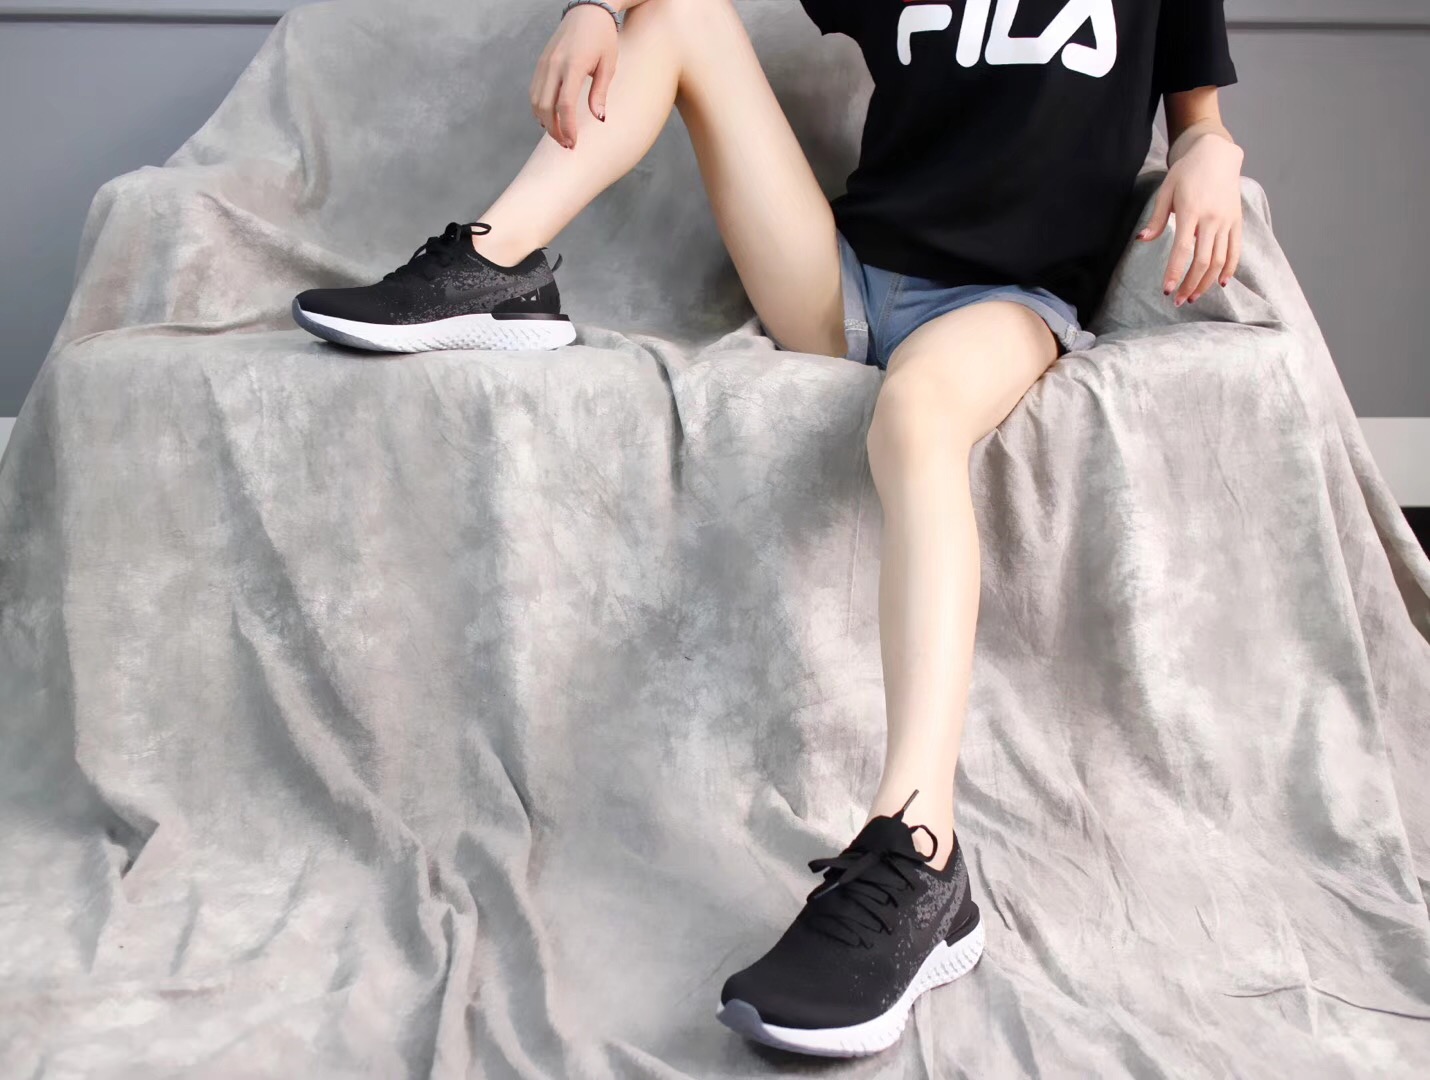 Giày Nike Epic React FlyKnit màu đen xám